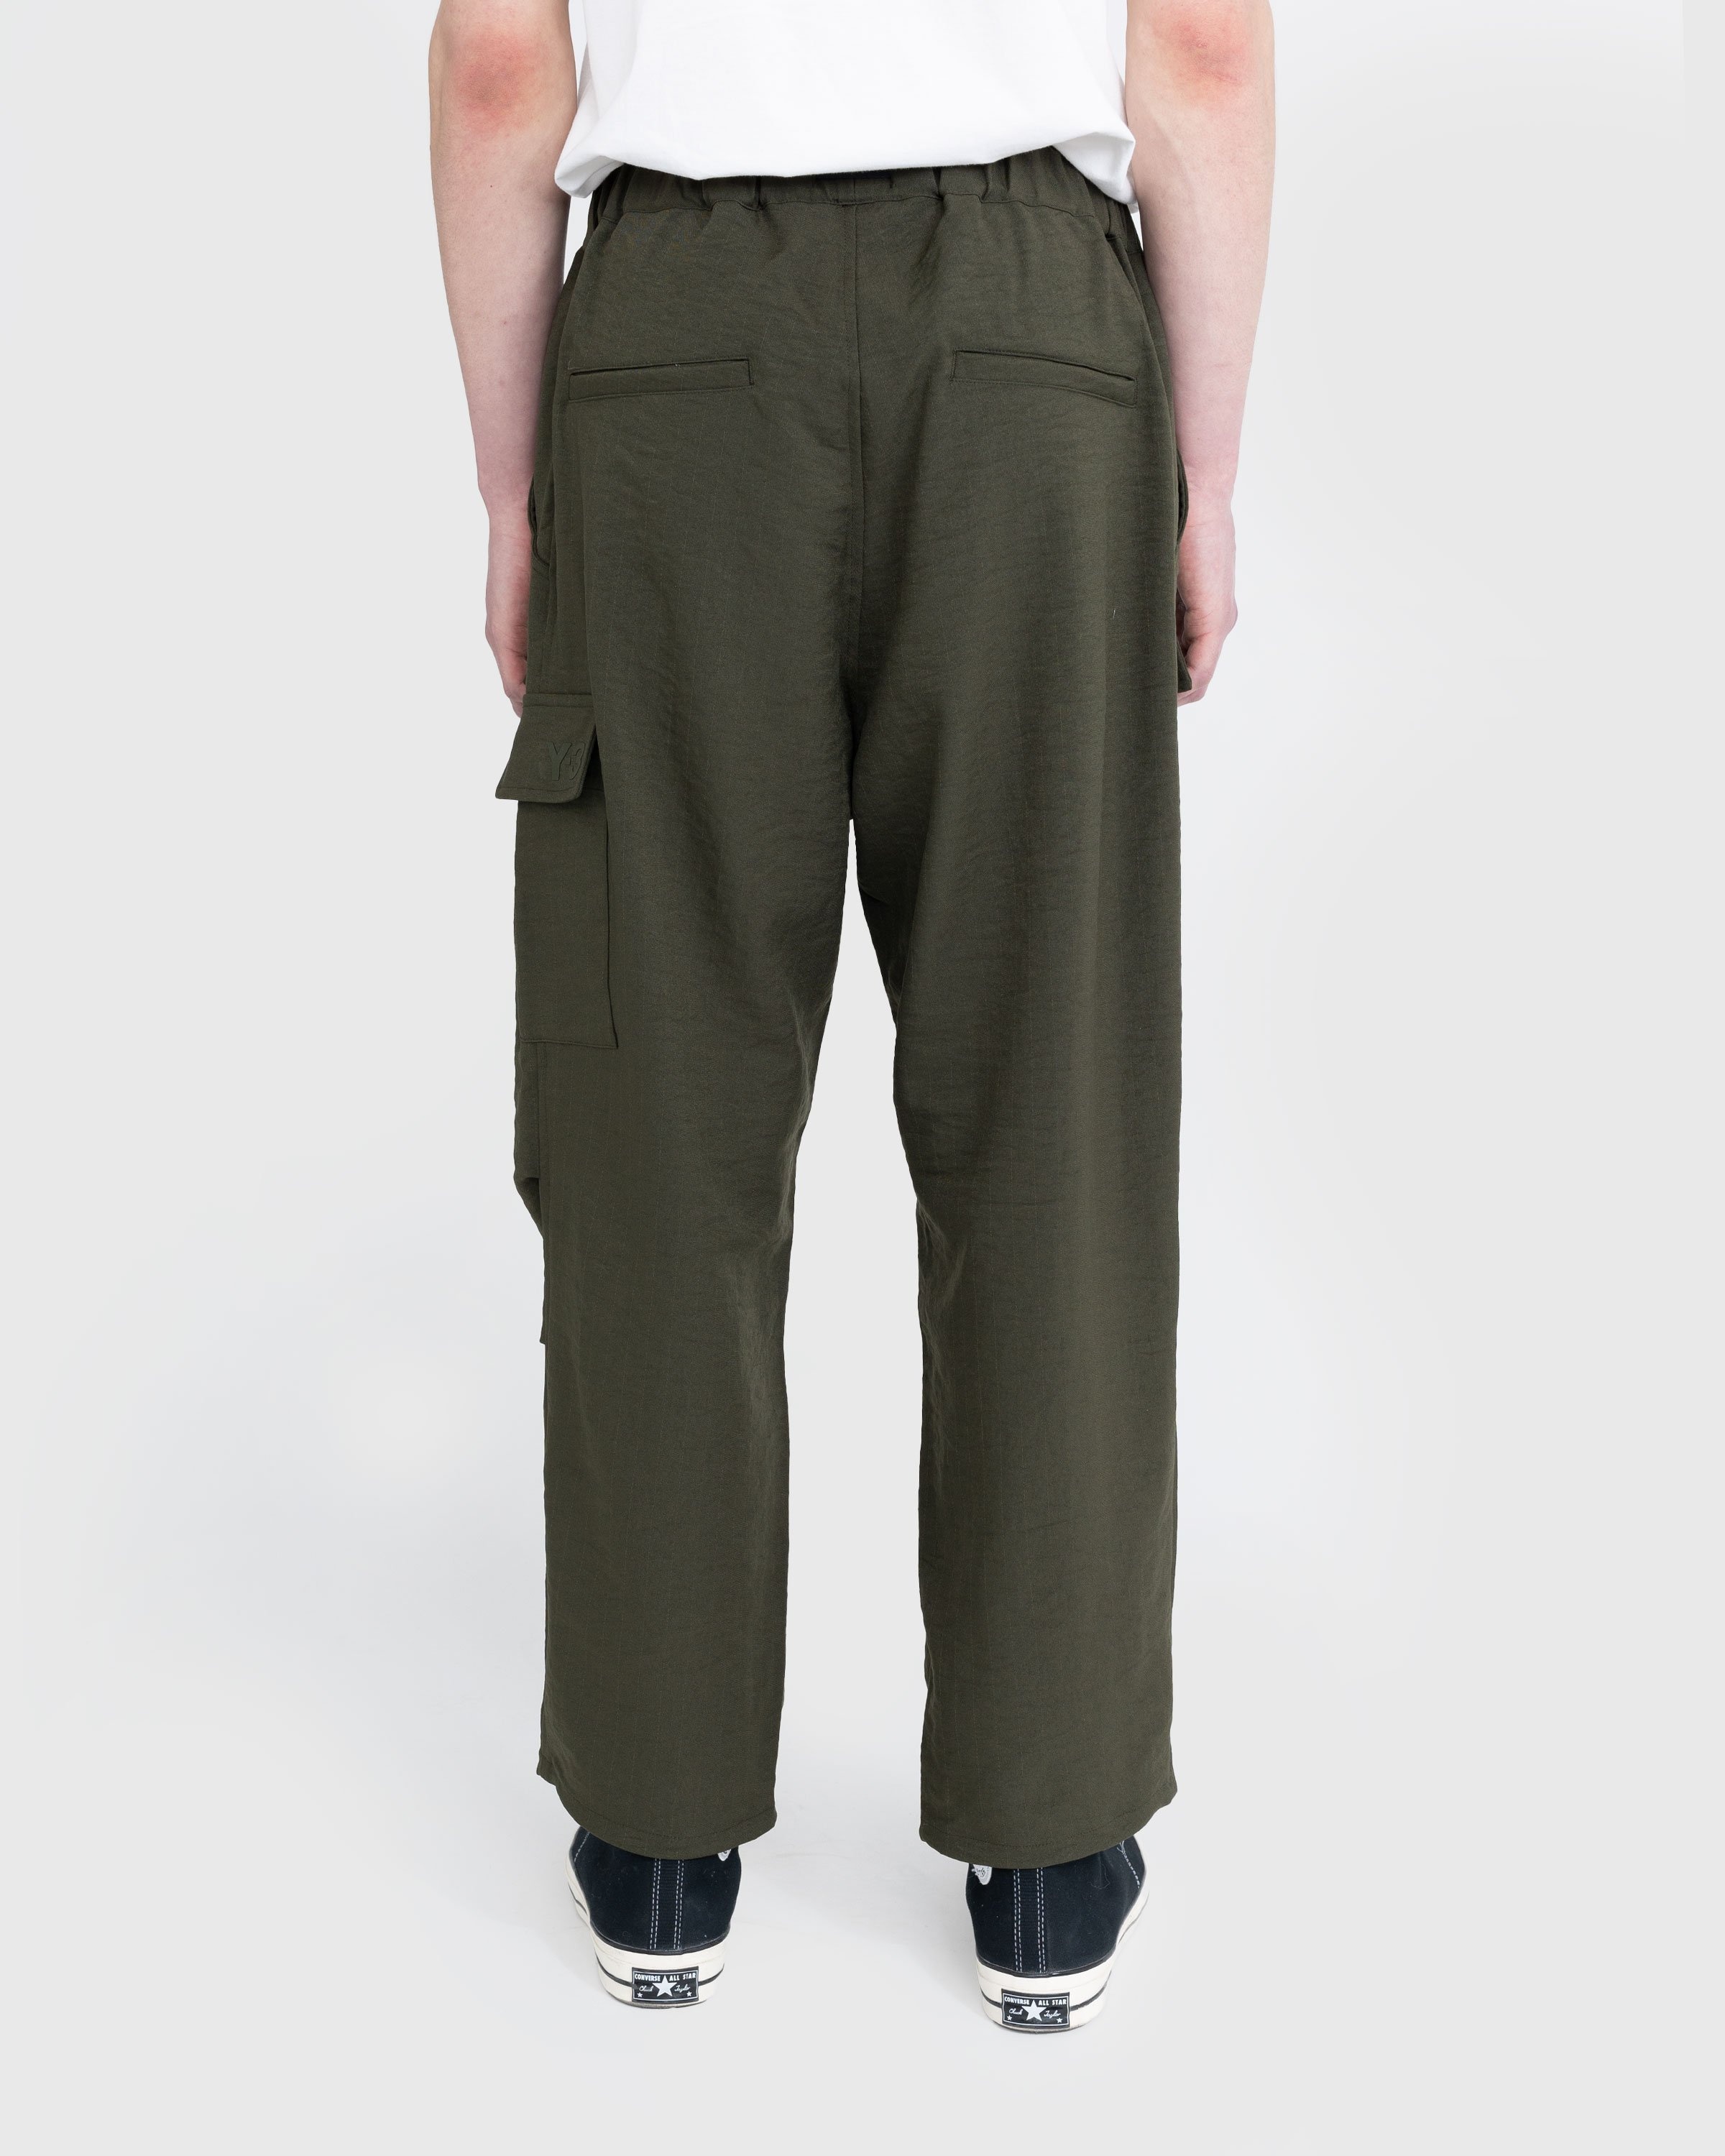 Y-3 – CL SL Cargo Pants - Pants - Green - Image 3